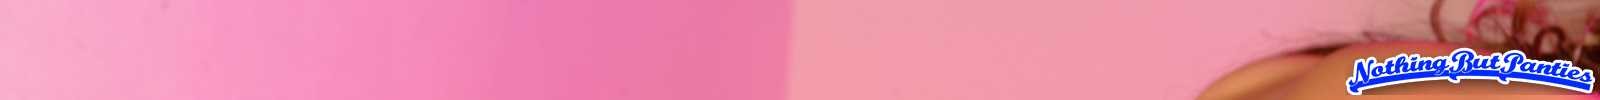 Peachez bragas de raso rosa en topless
 #72635598